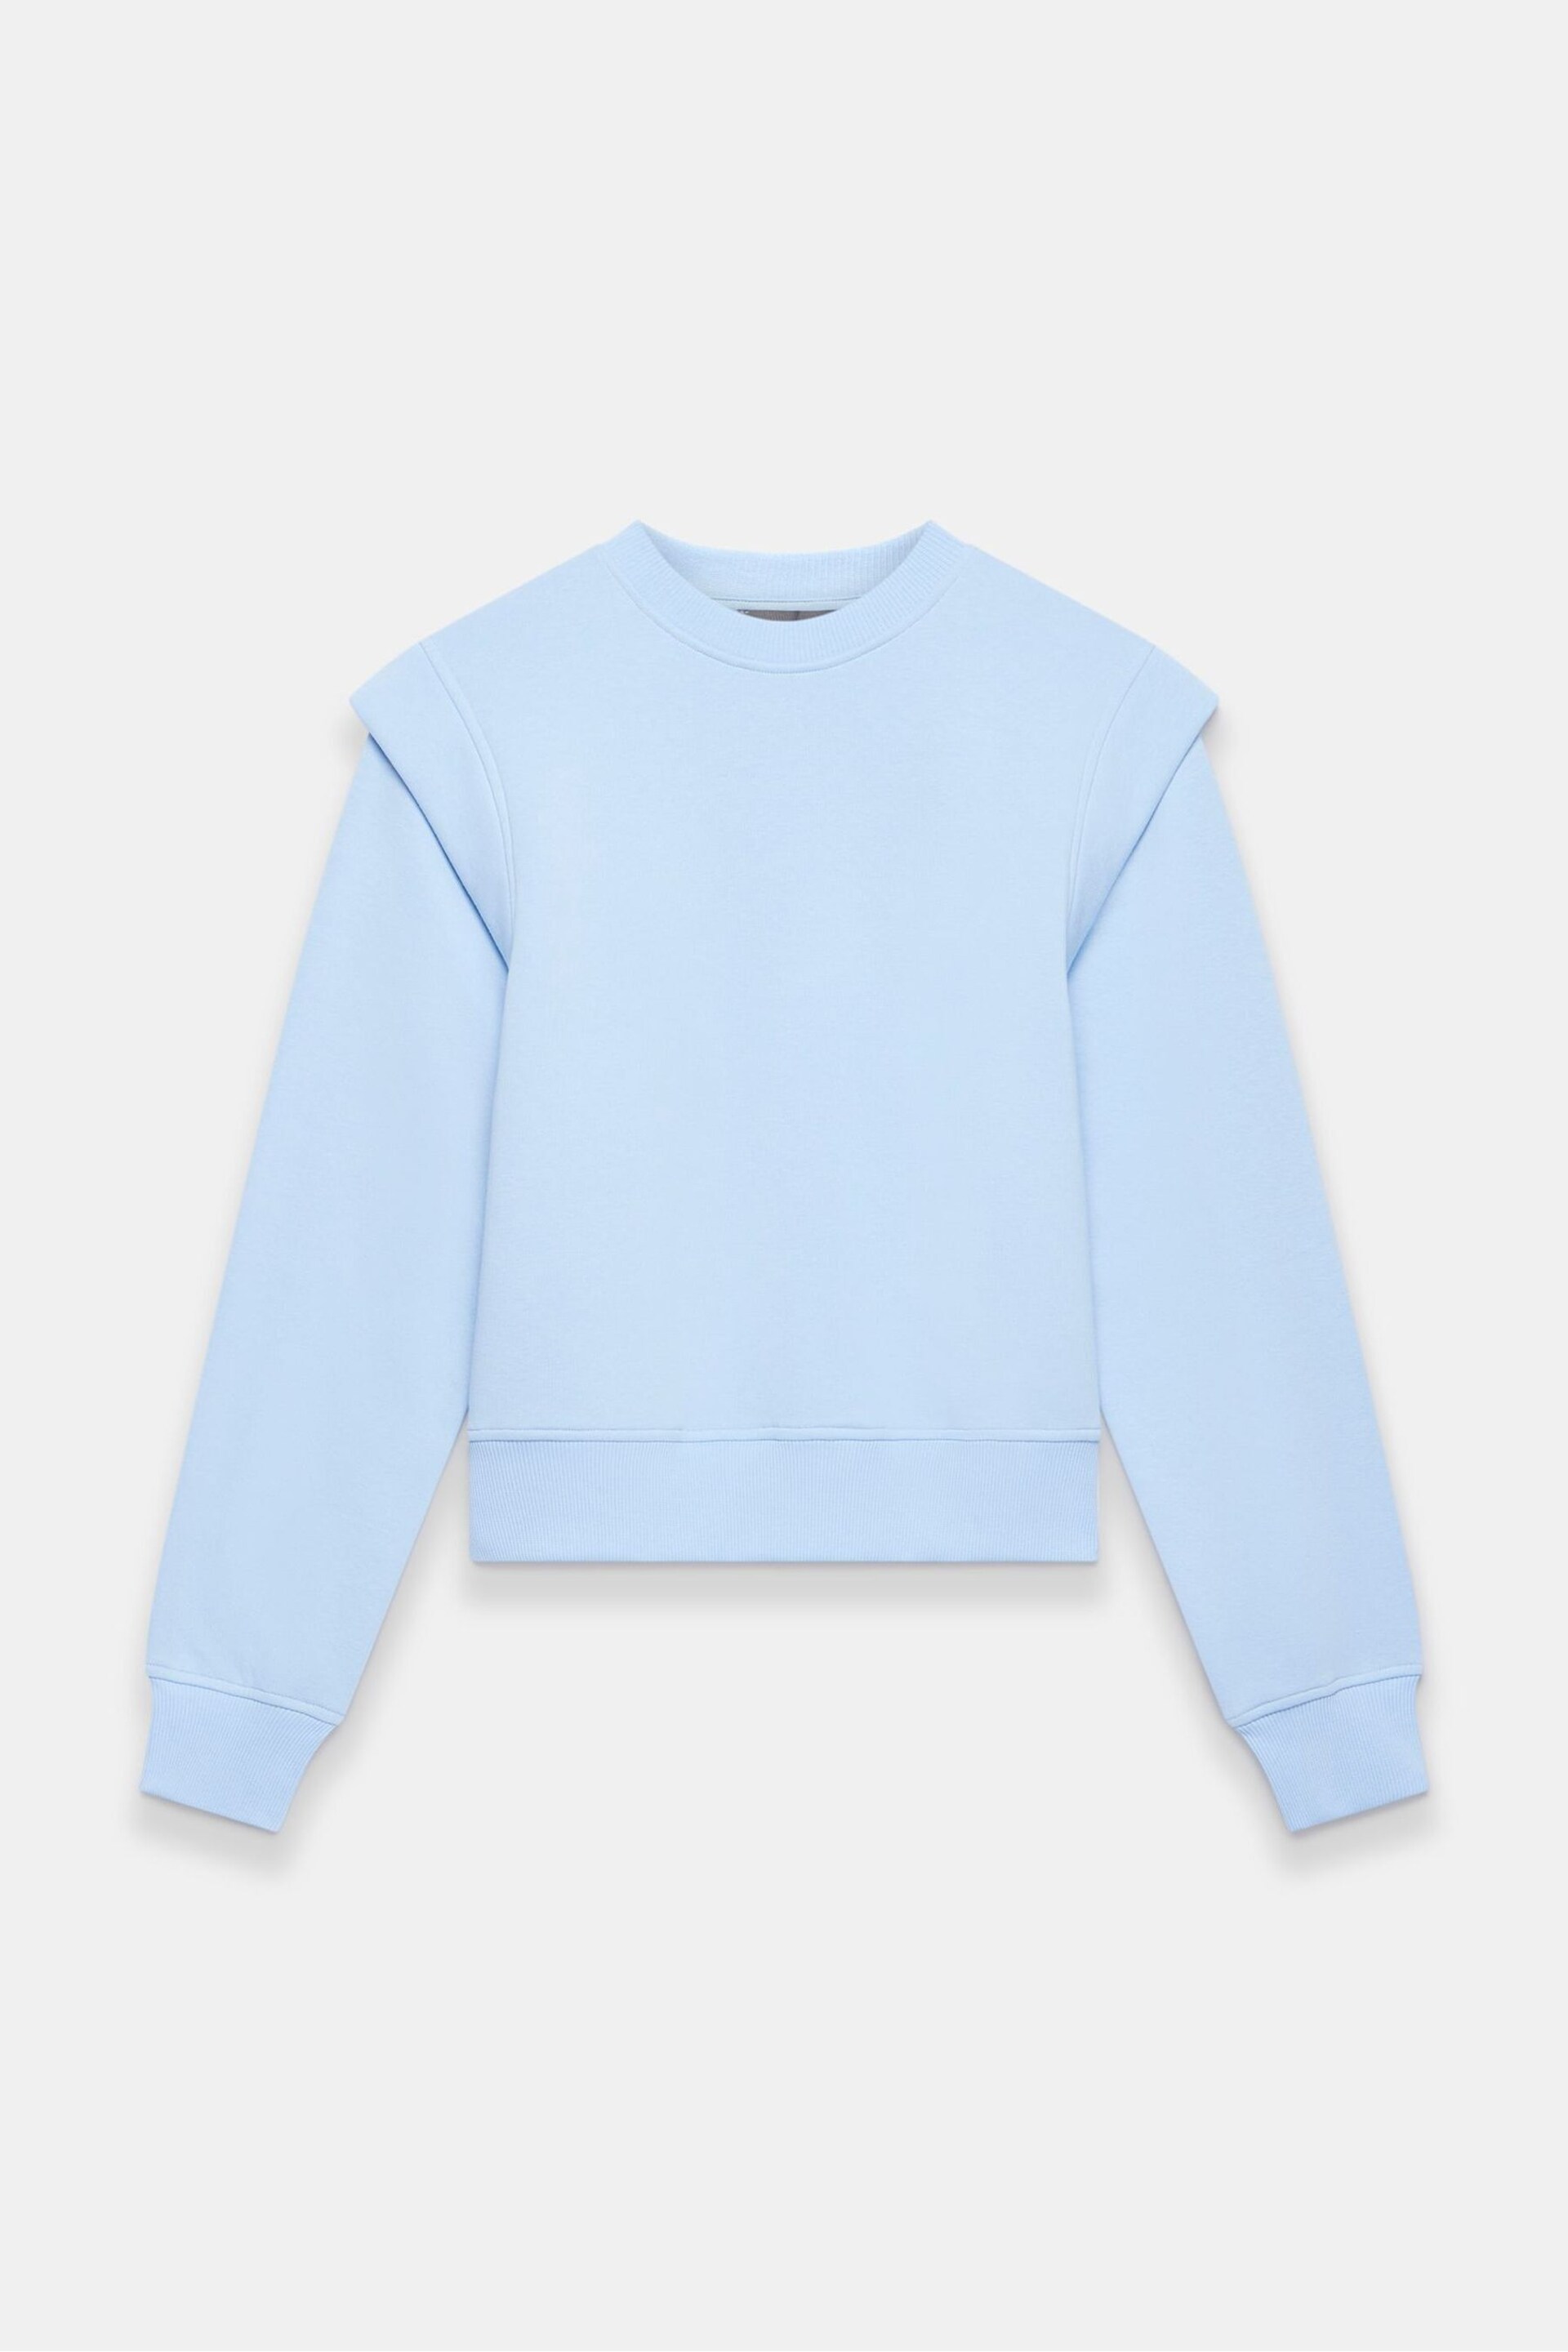 Mint Velvet Blue Cotton Sweatshirt - Image 3 of 4